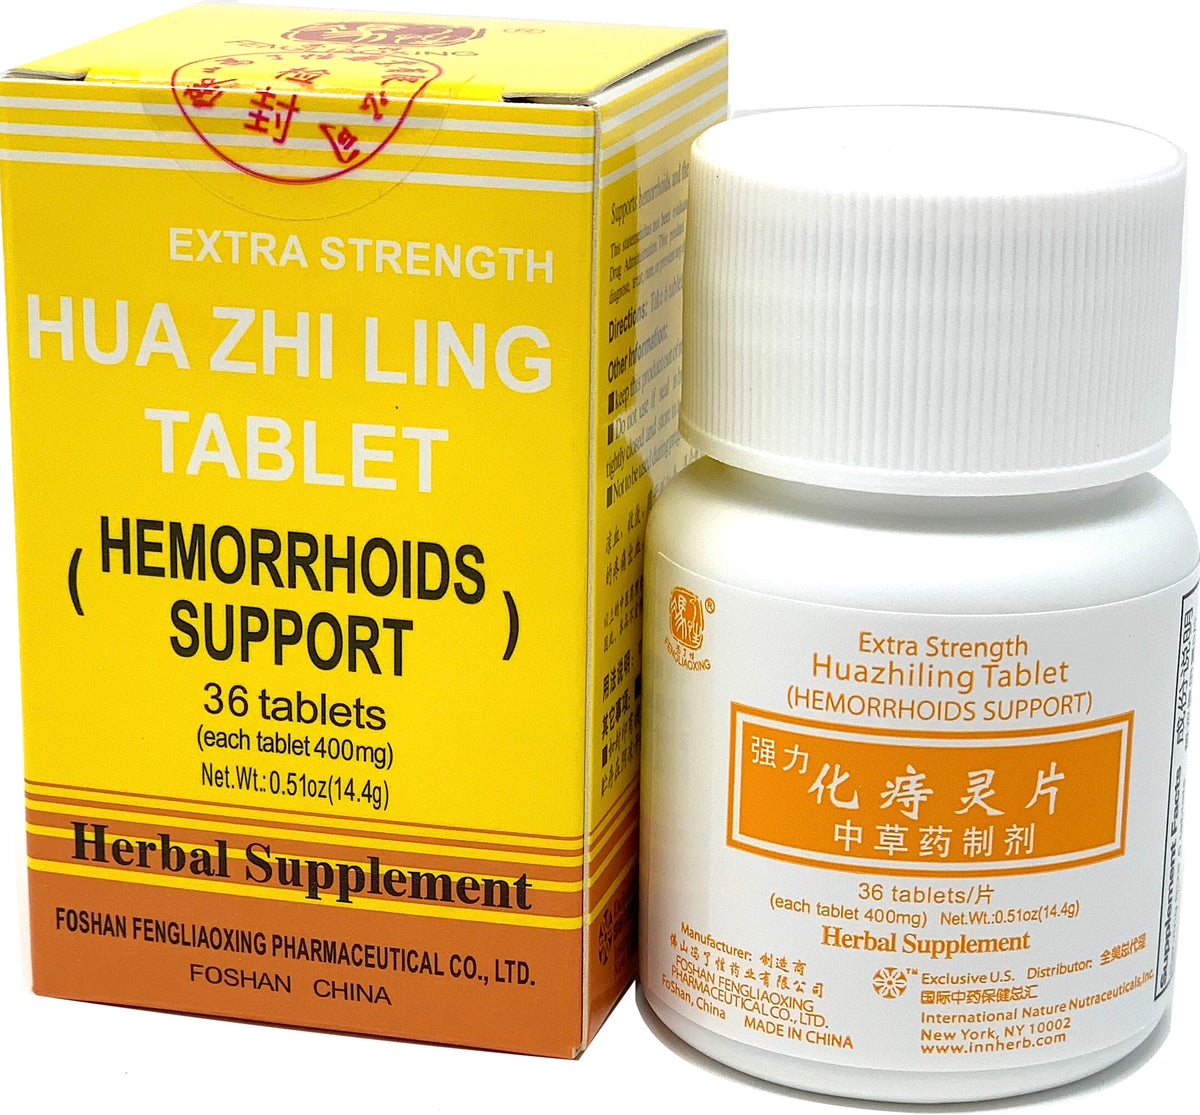 Hemorrhoids Support (Hua Zhi Ling Tablet) 强力化痔灵